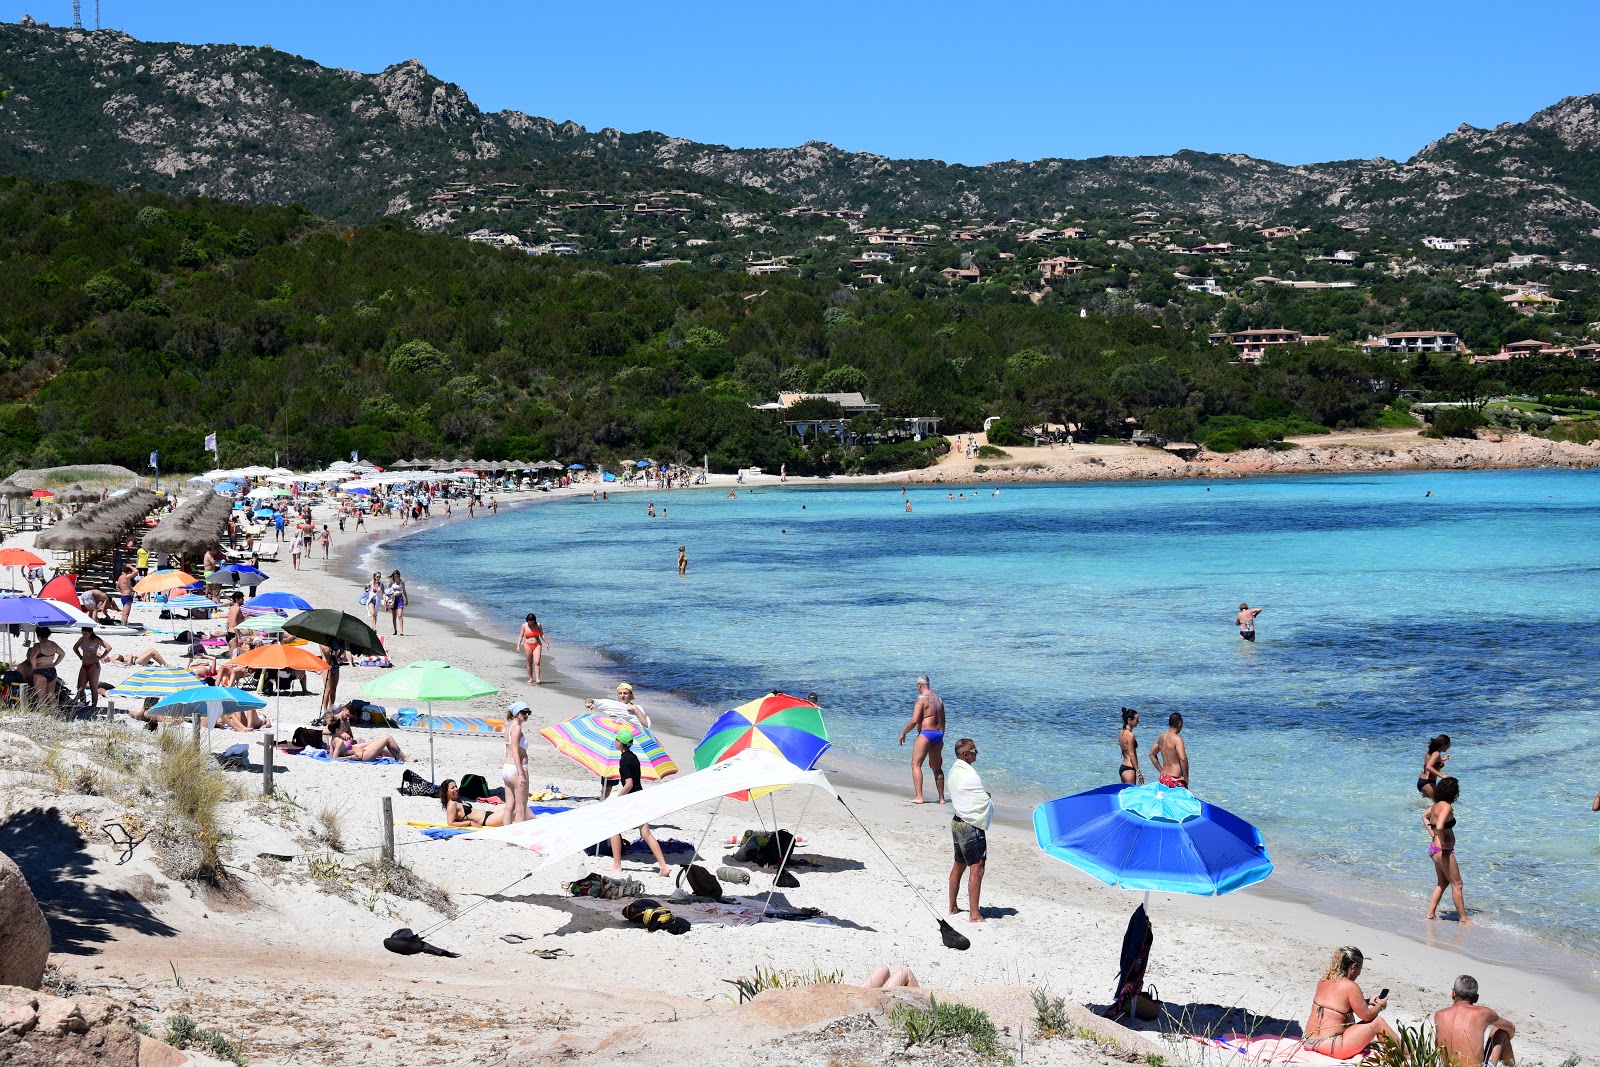 Spiaggia Piccolo Pevero'in fotoğrafı parlak kum yüzey ile